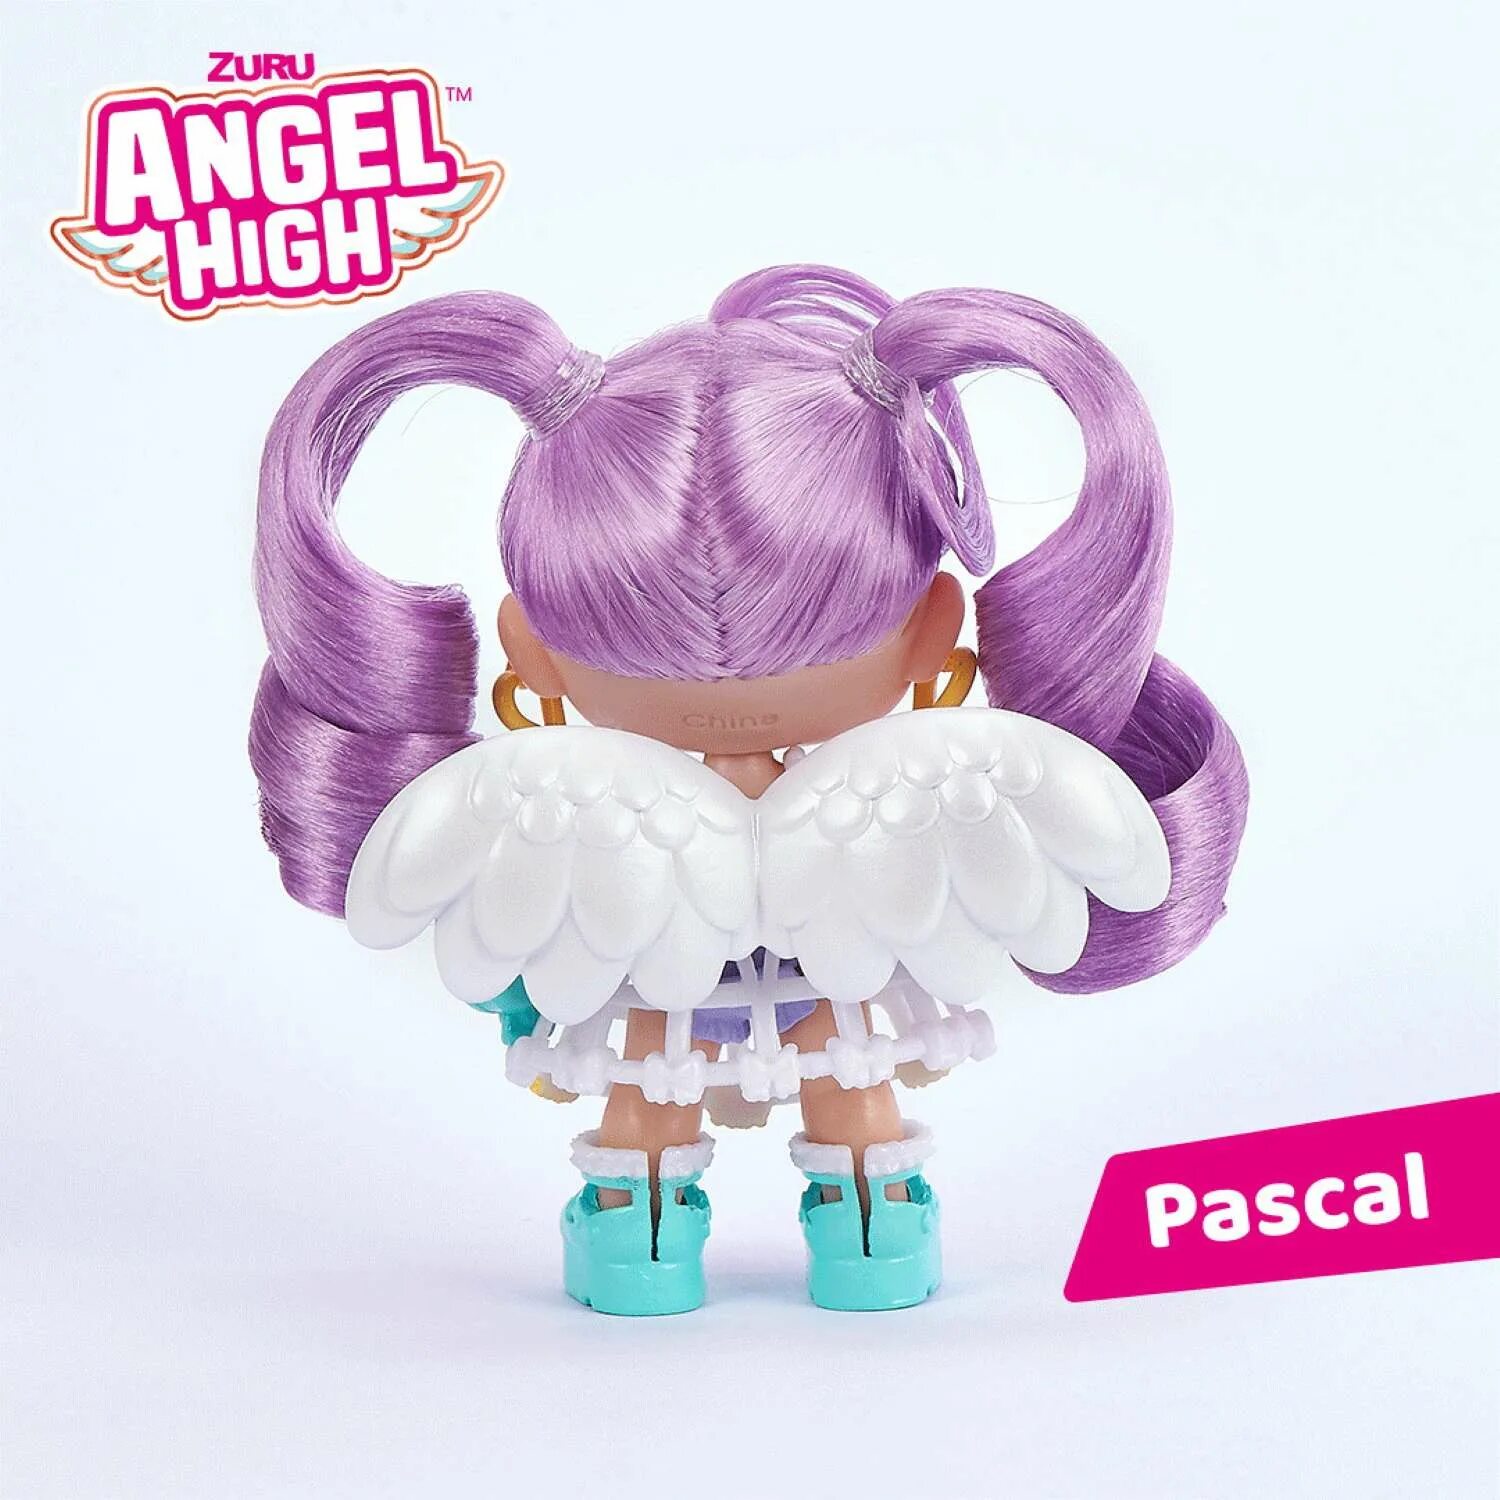 Ангелы хай. Кукла Angel High +10аксессуаров 9710sq1-s002. Энджел Хай кукла. Кукла Angel High +10. Кукла Angel High +10ксессуаров.